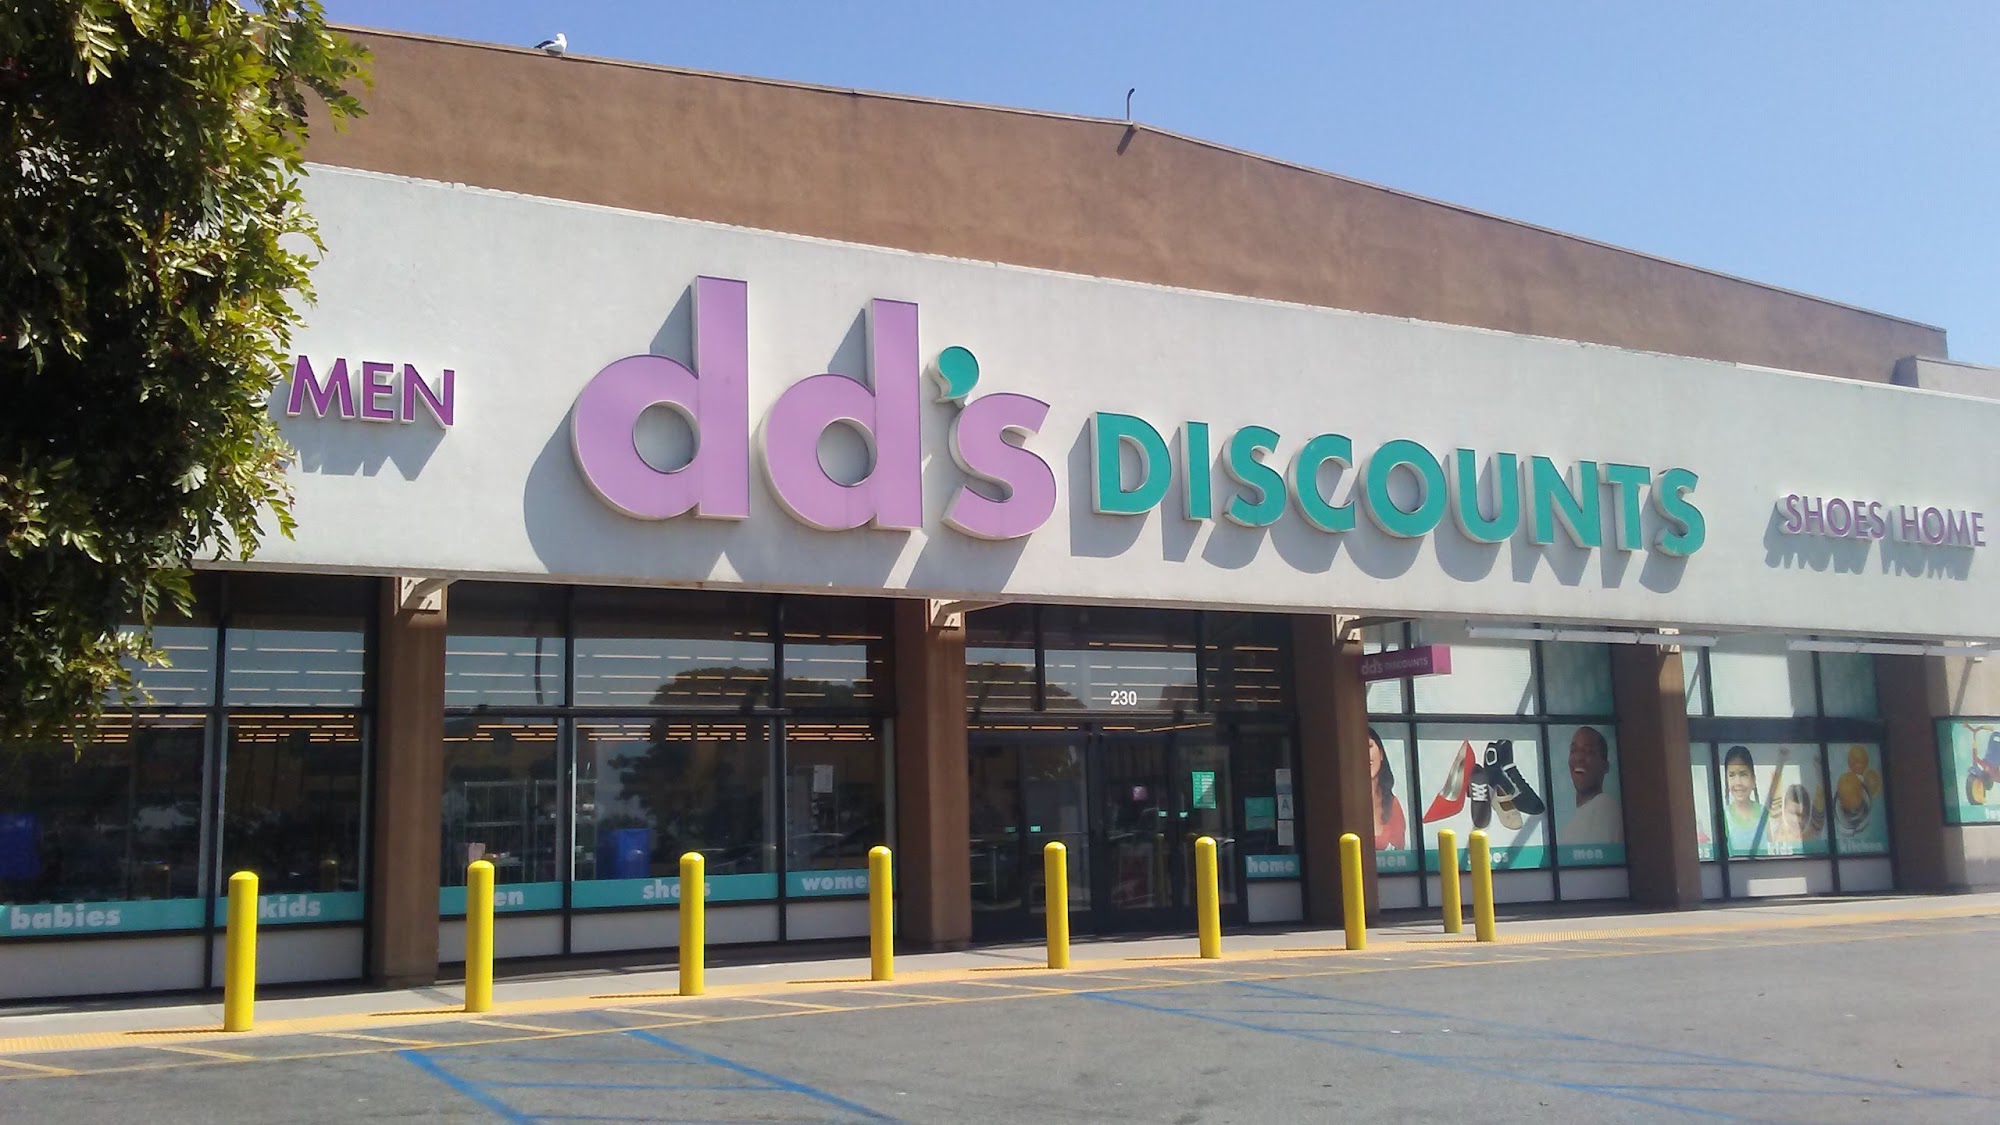 dd's DISCOUNTS